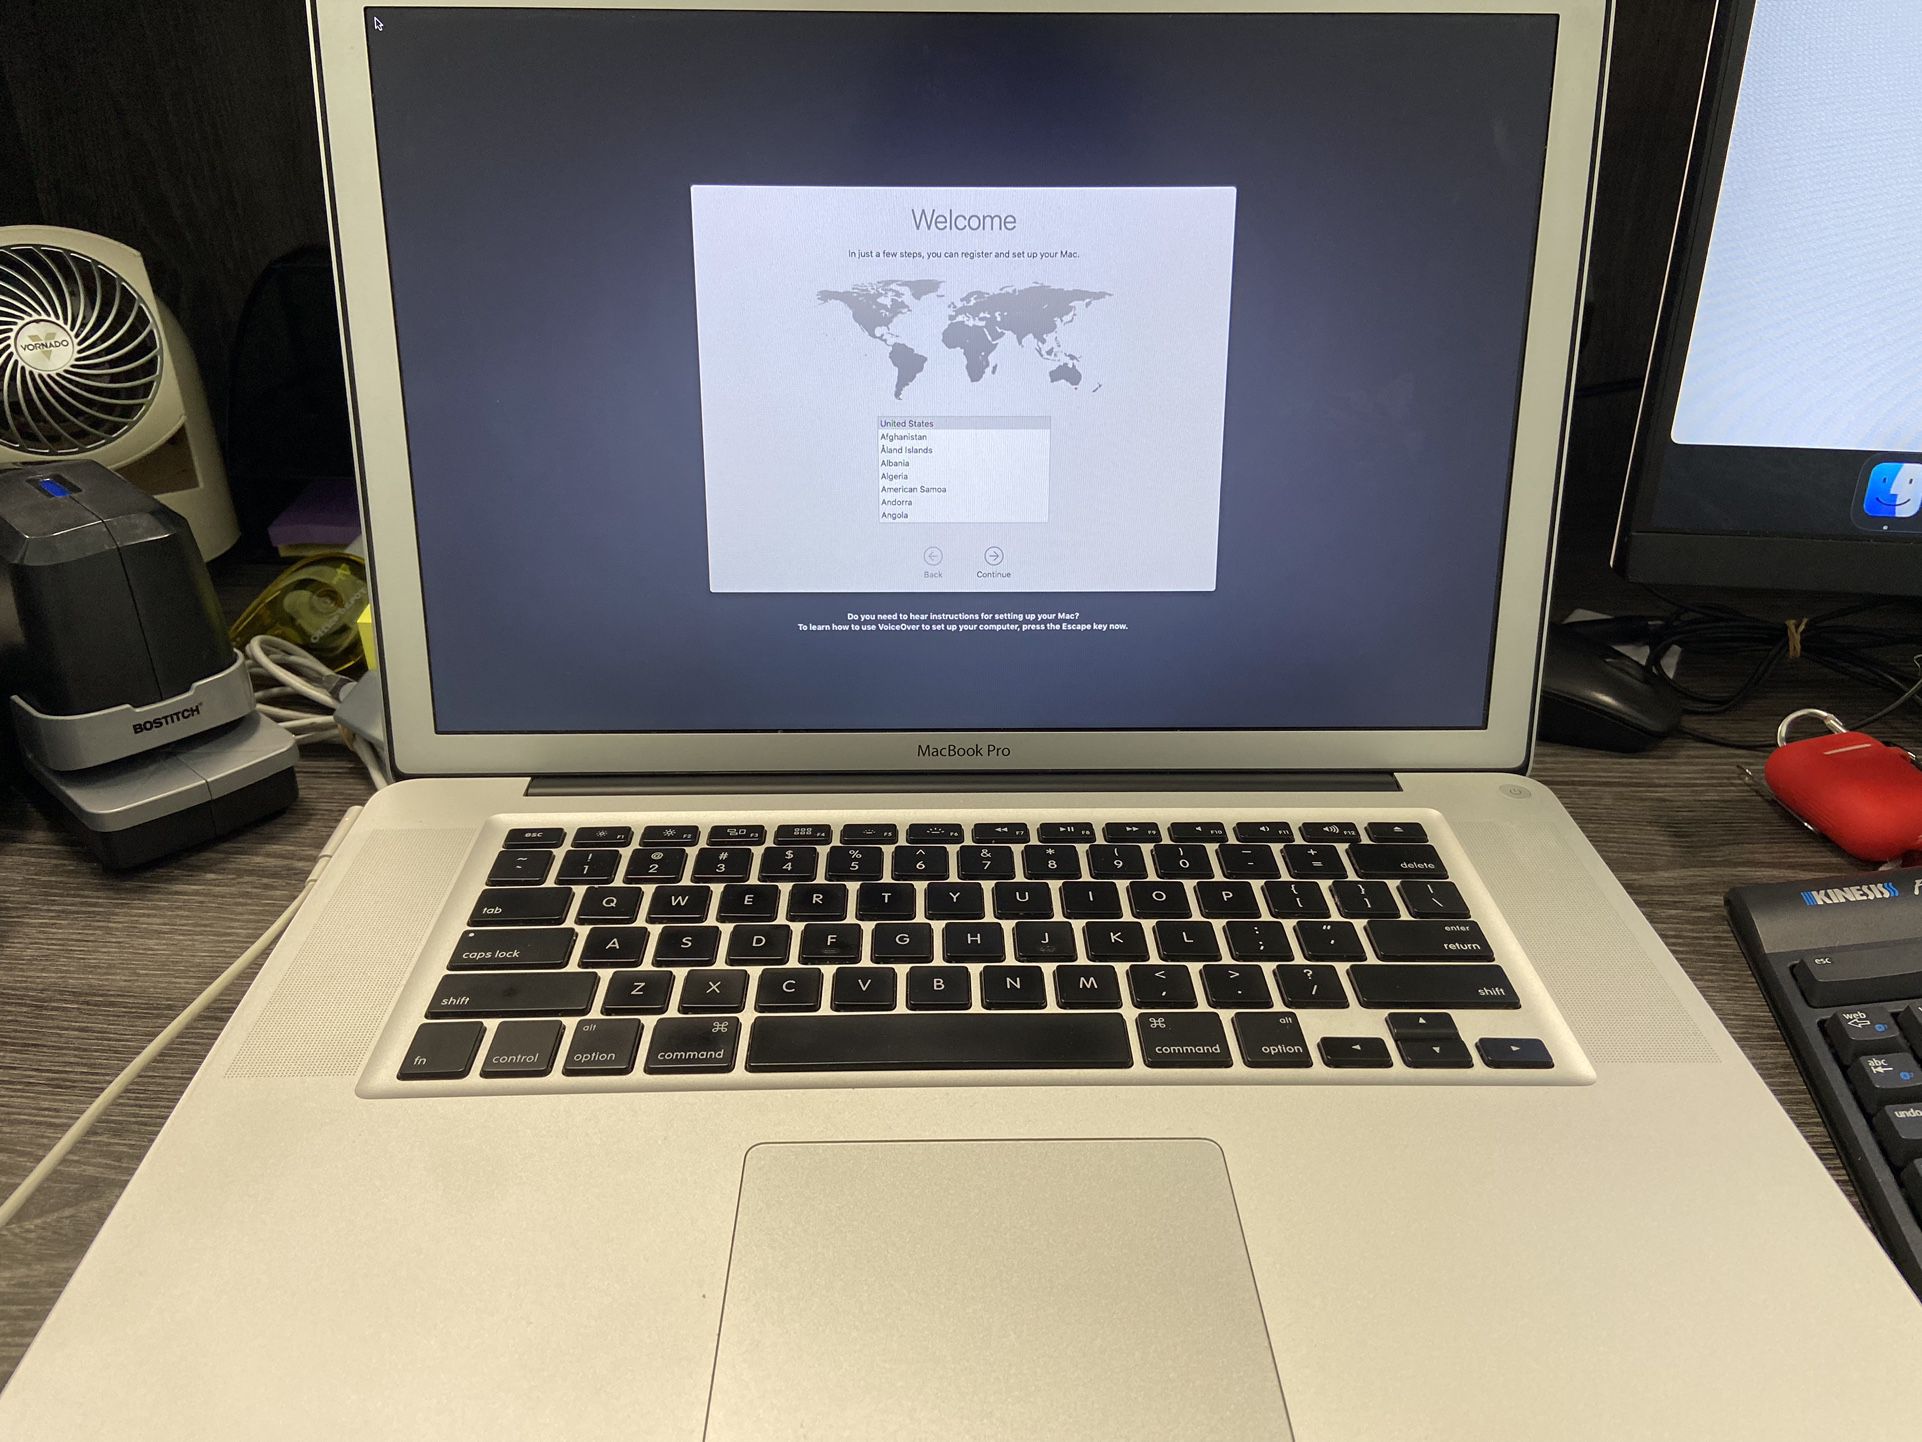 Apple MacBook Pro (15-inch, Late 2011)